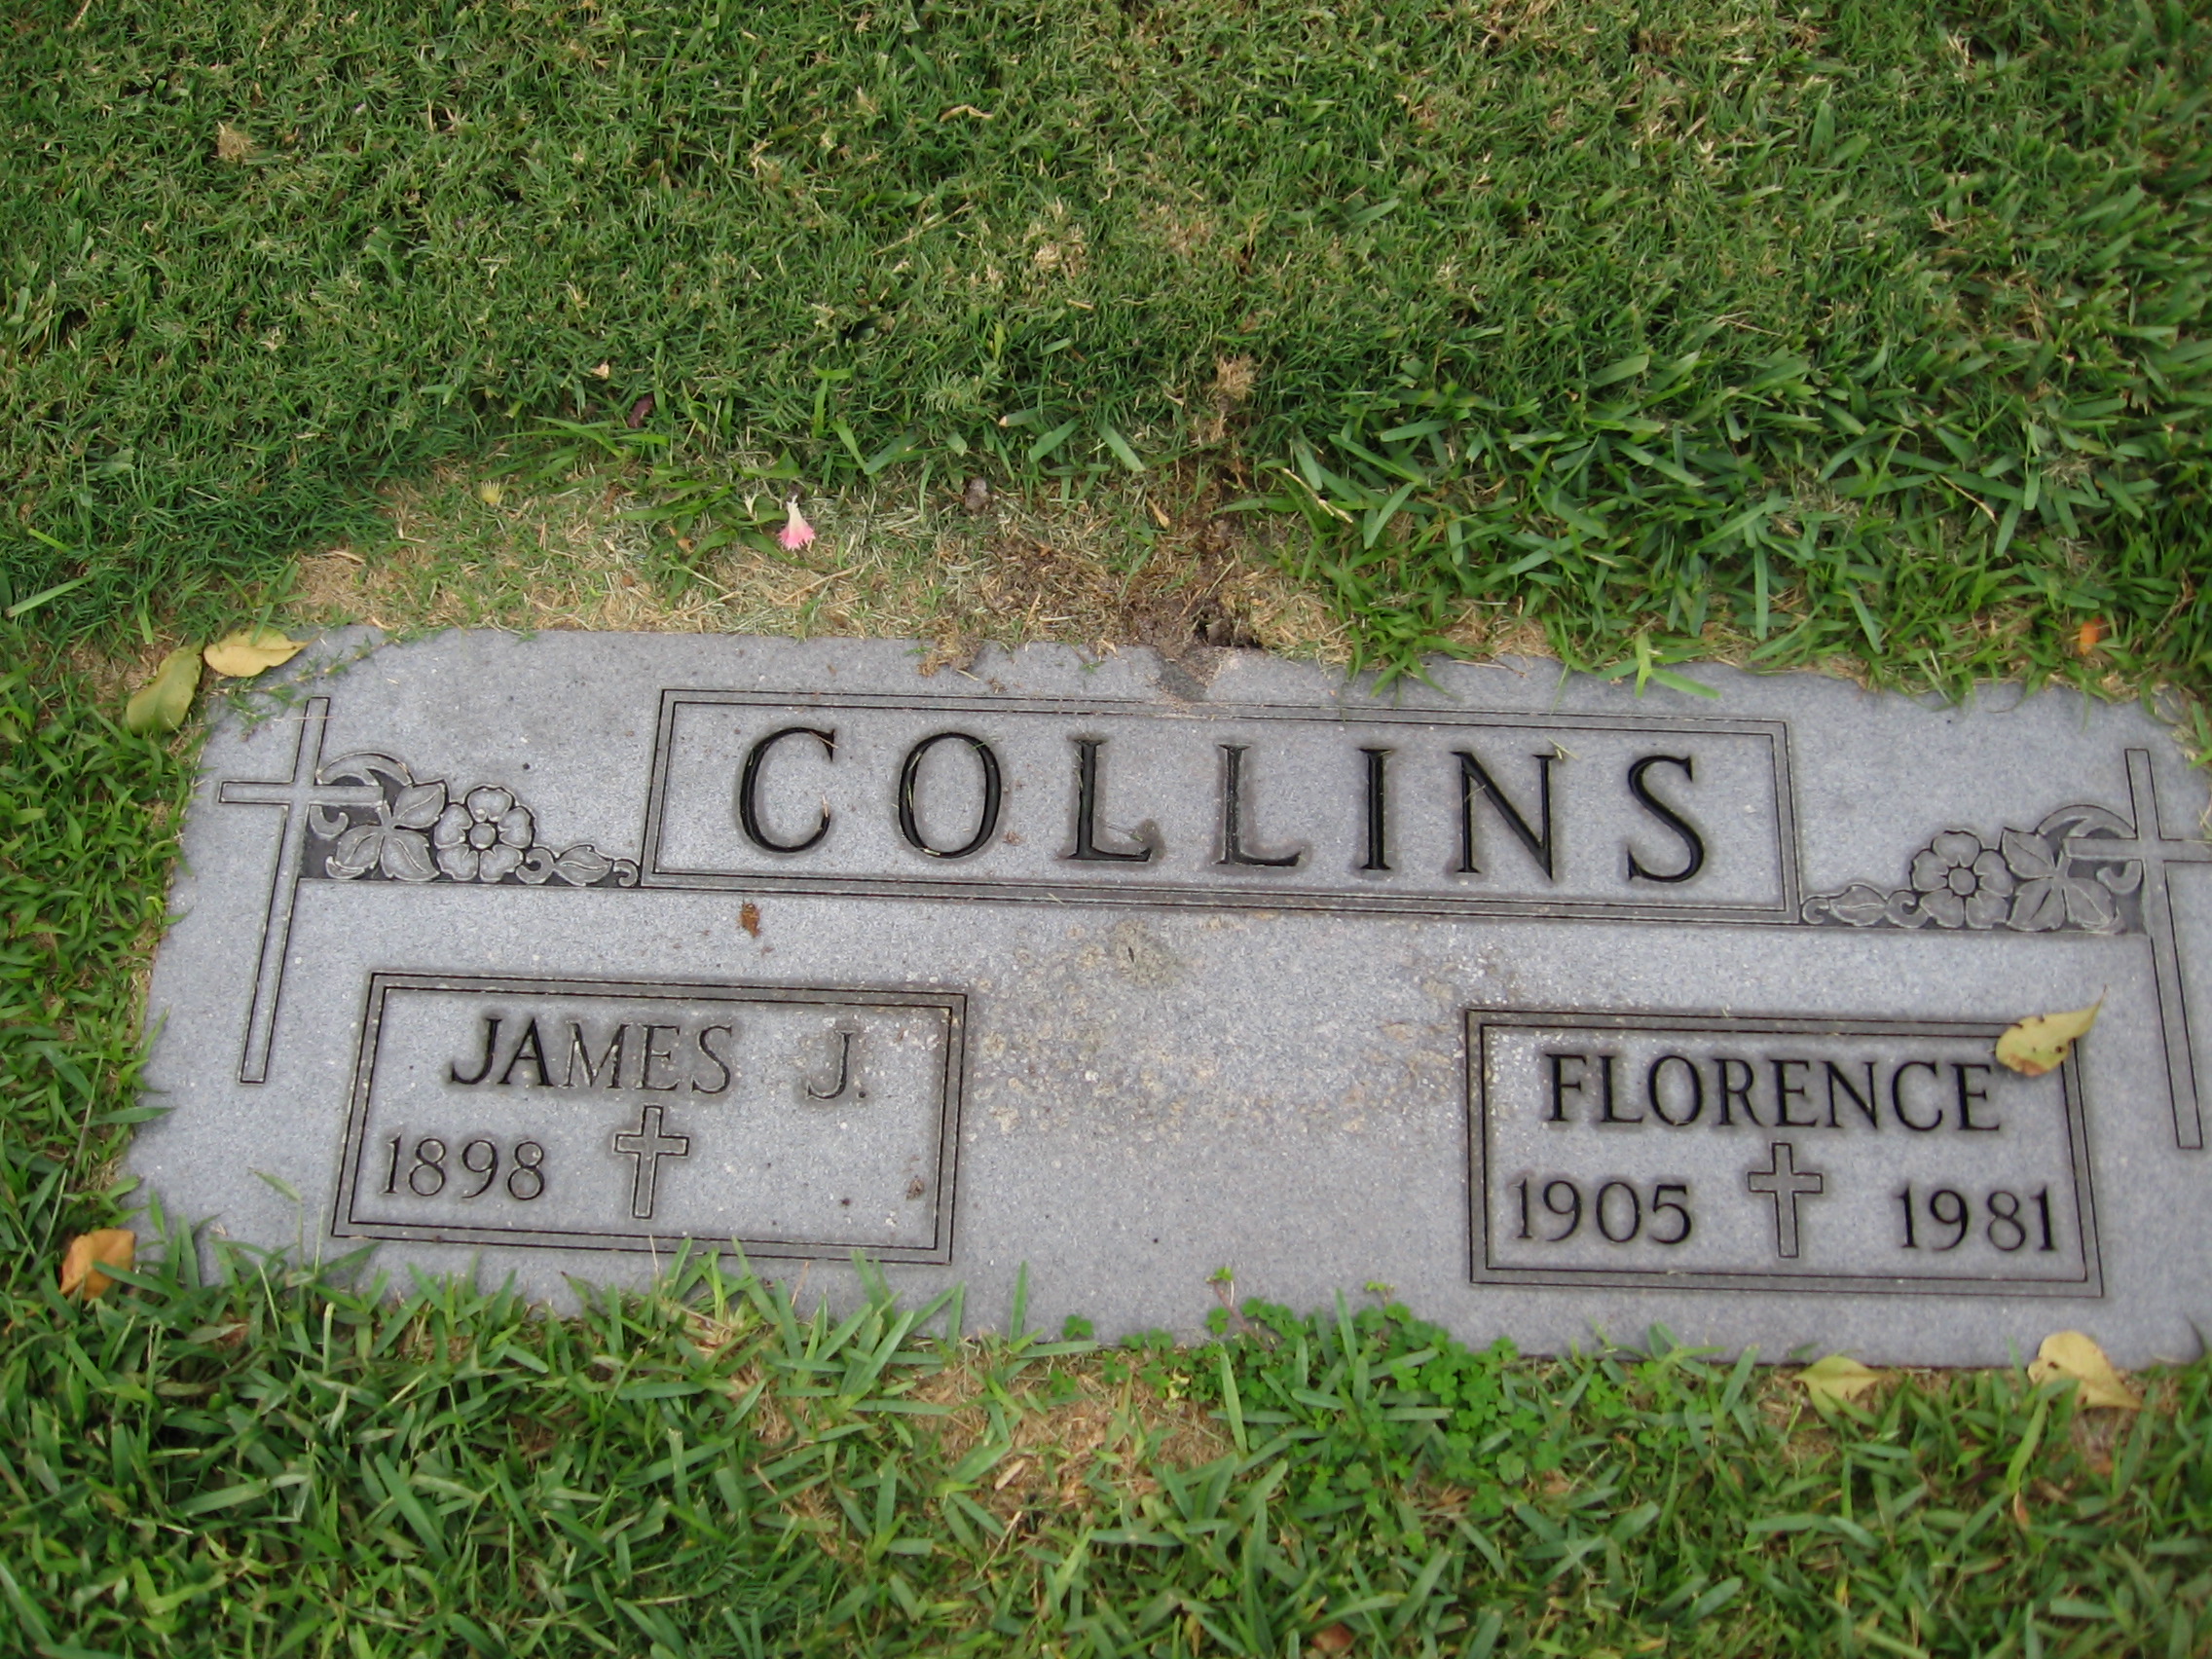 James J Collins